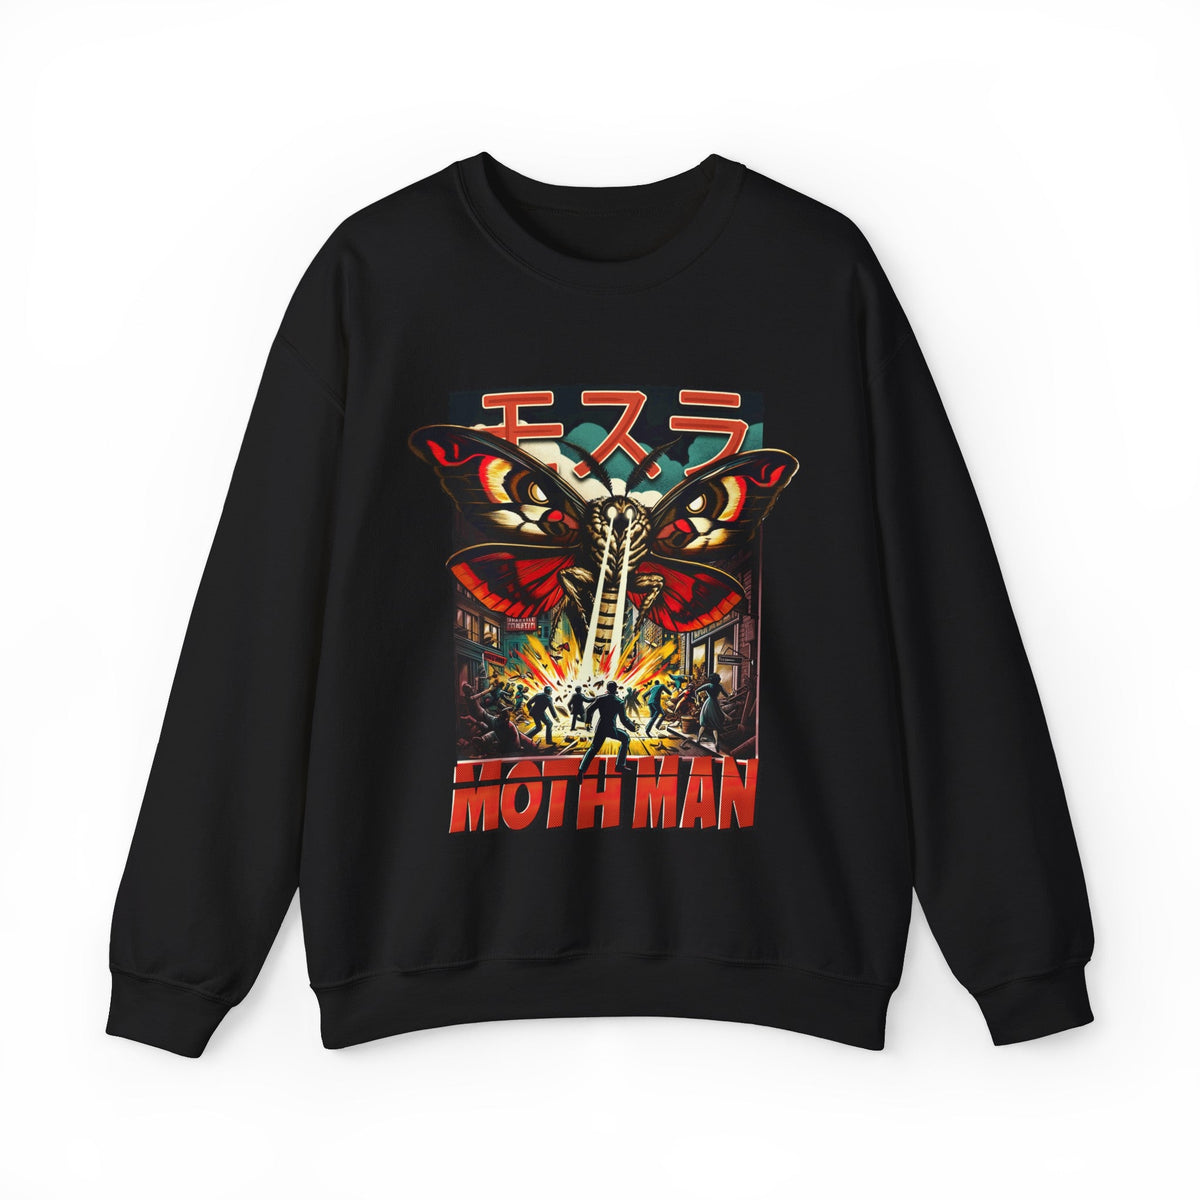 Mothman City Attack Crewneck Sweatshirt - Goth Cloth Co.Sweatshirt30154740736574492617